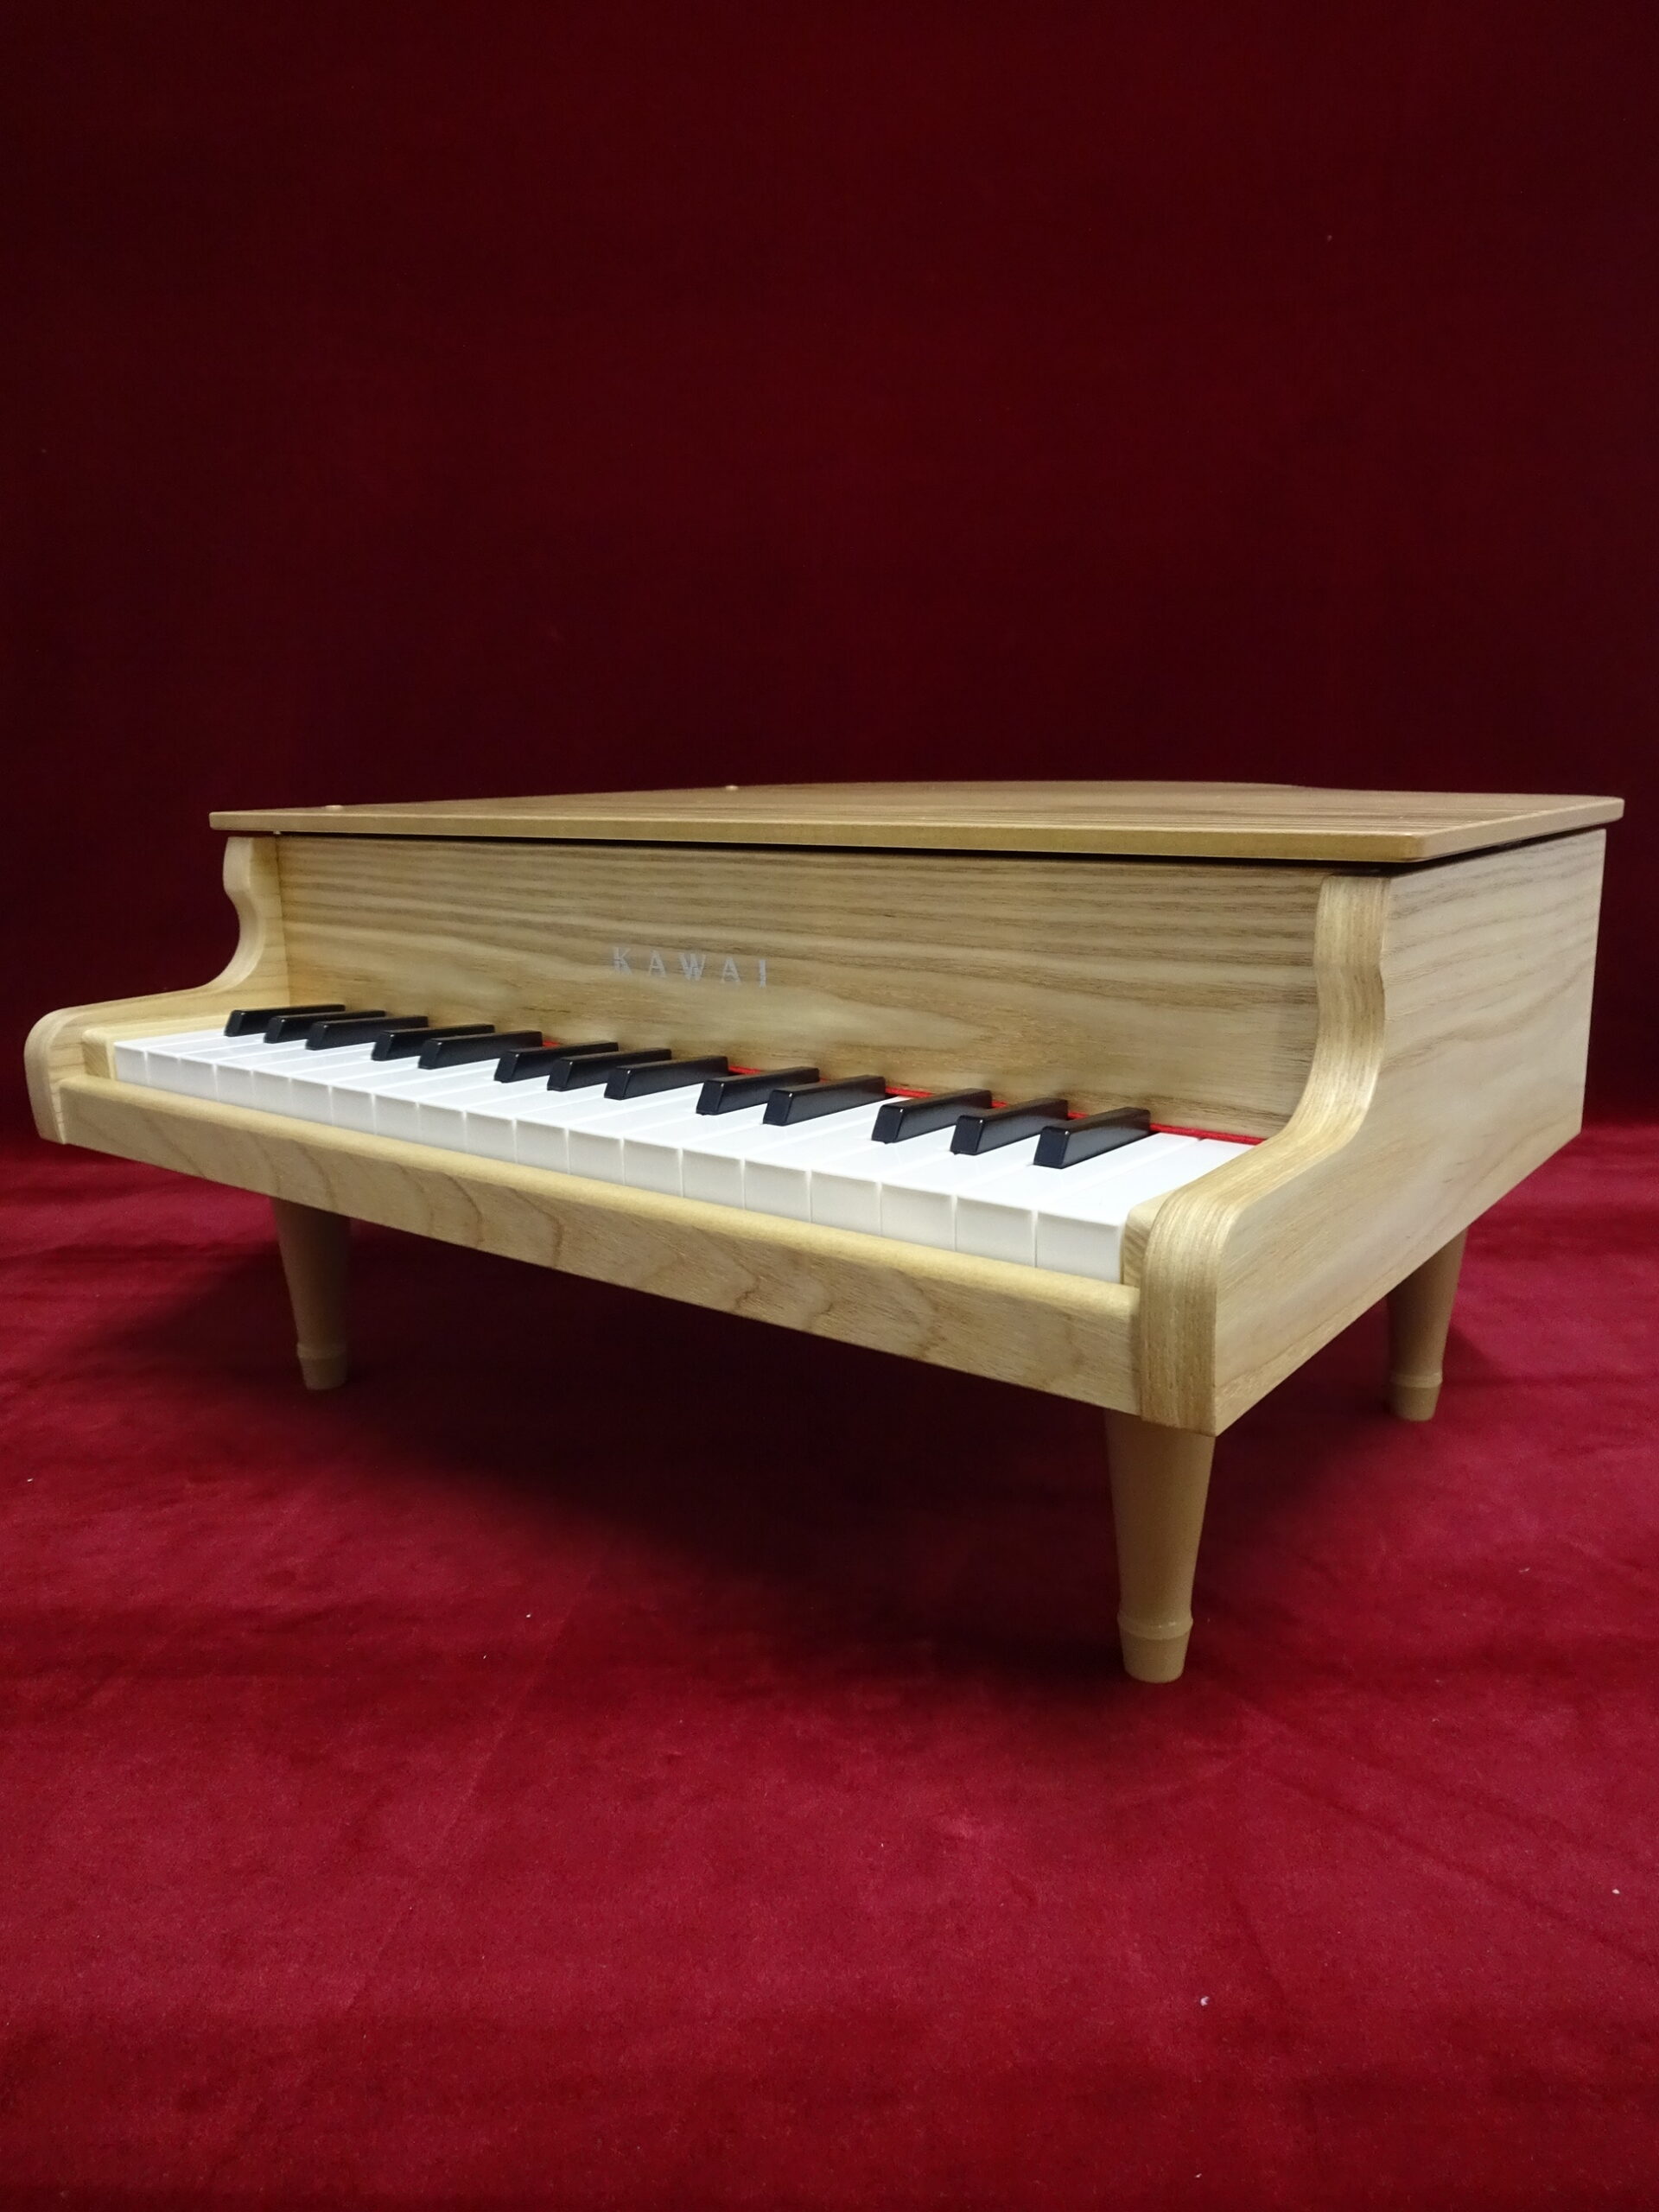 KAWAI グランドピアノ ナチュラル 1144 | オリエント楽器｜各種楽器